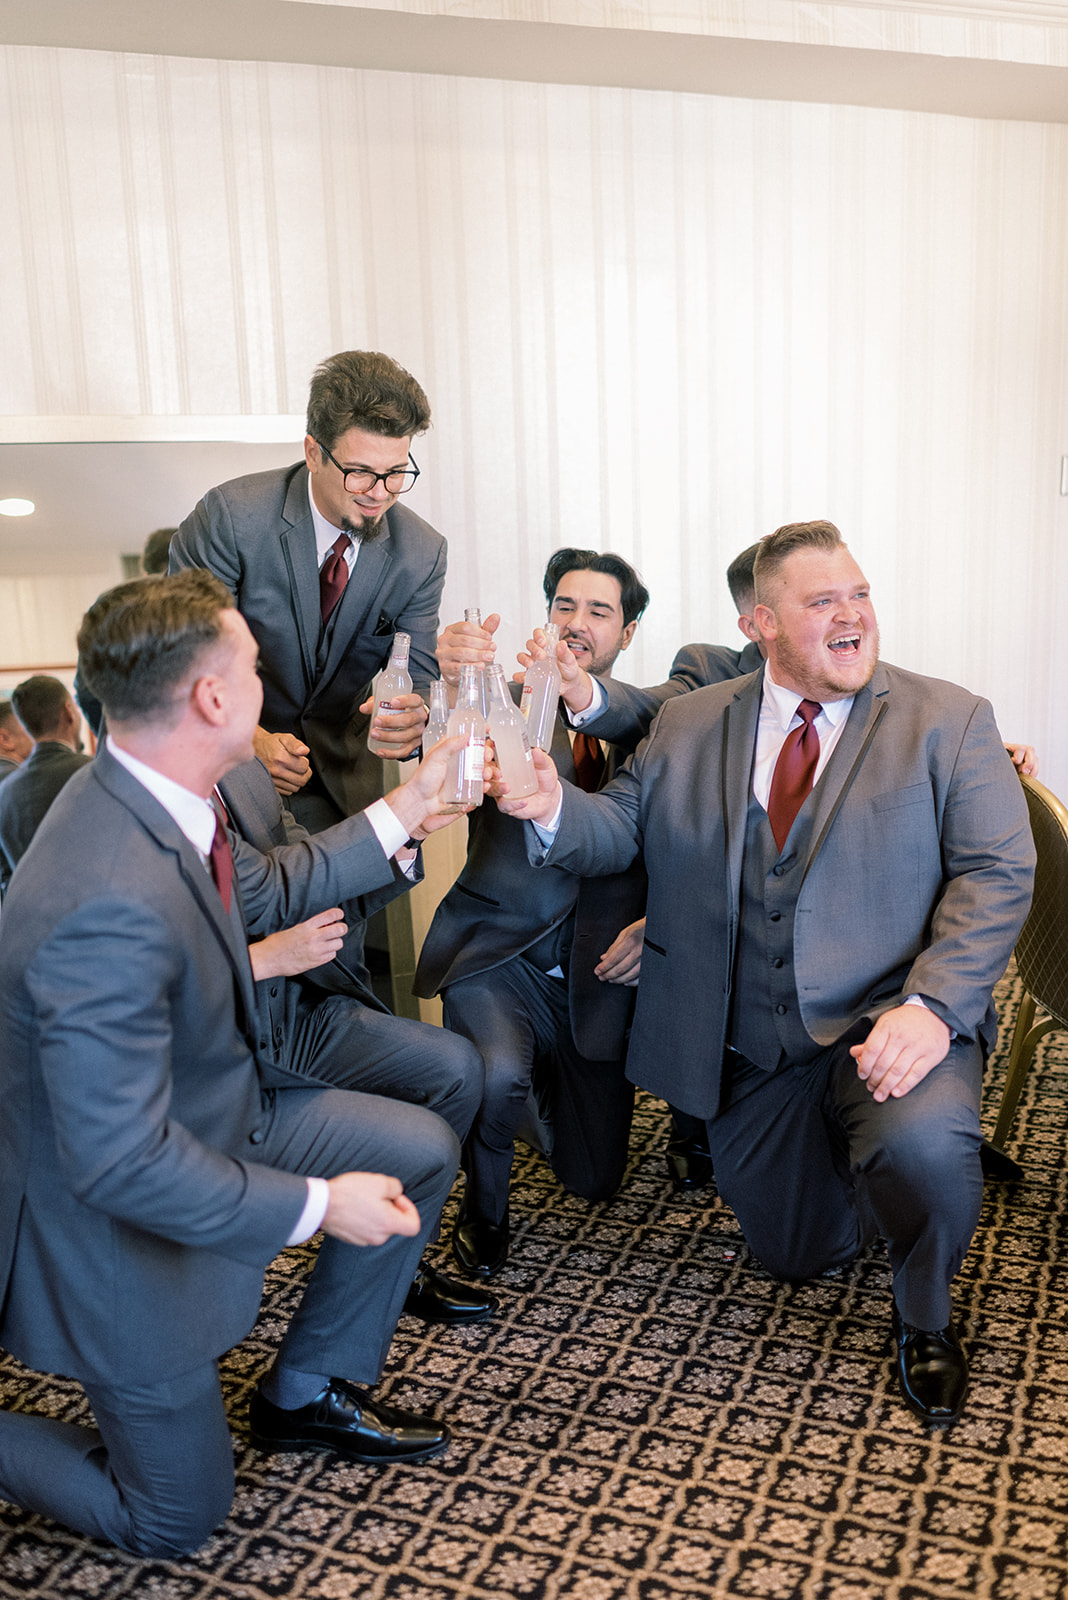 Pennsylvania wedding photographer captures groomsmen kneeling and toasting drinks